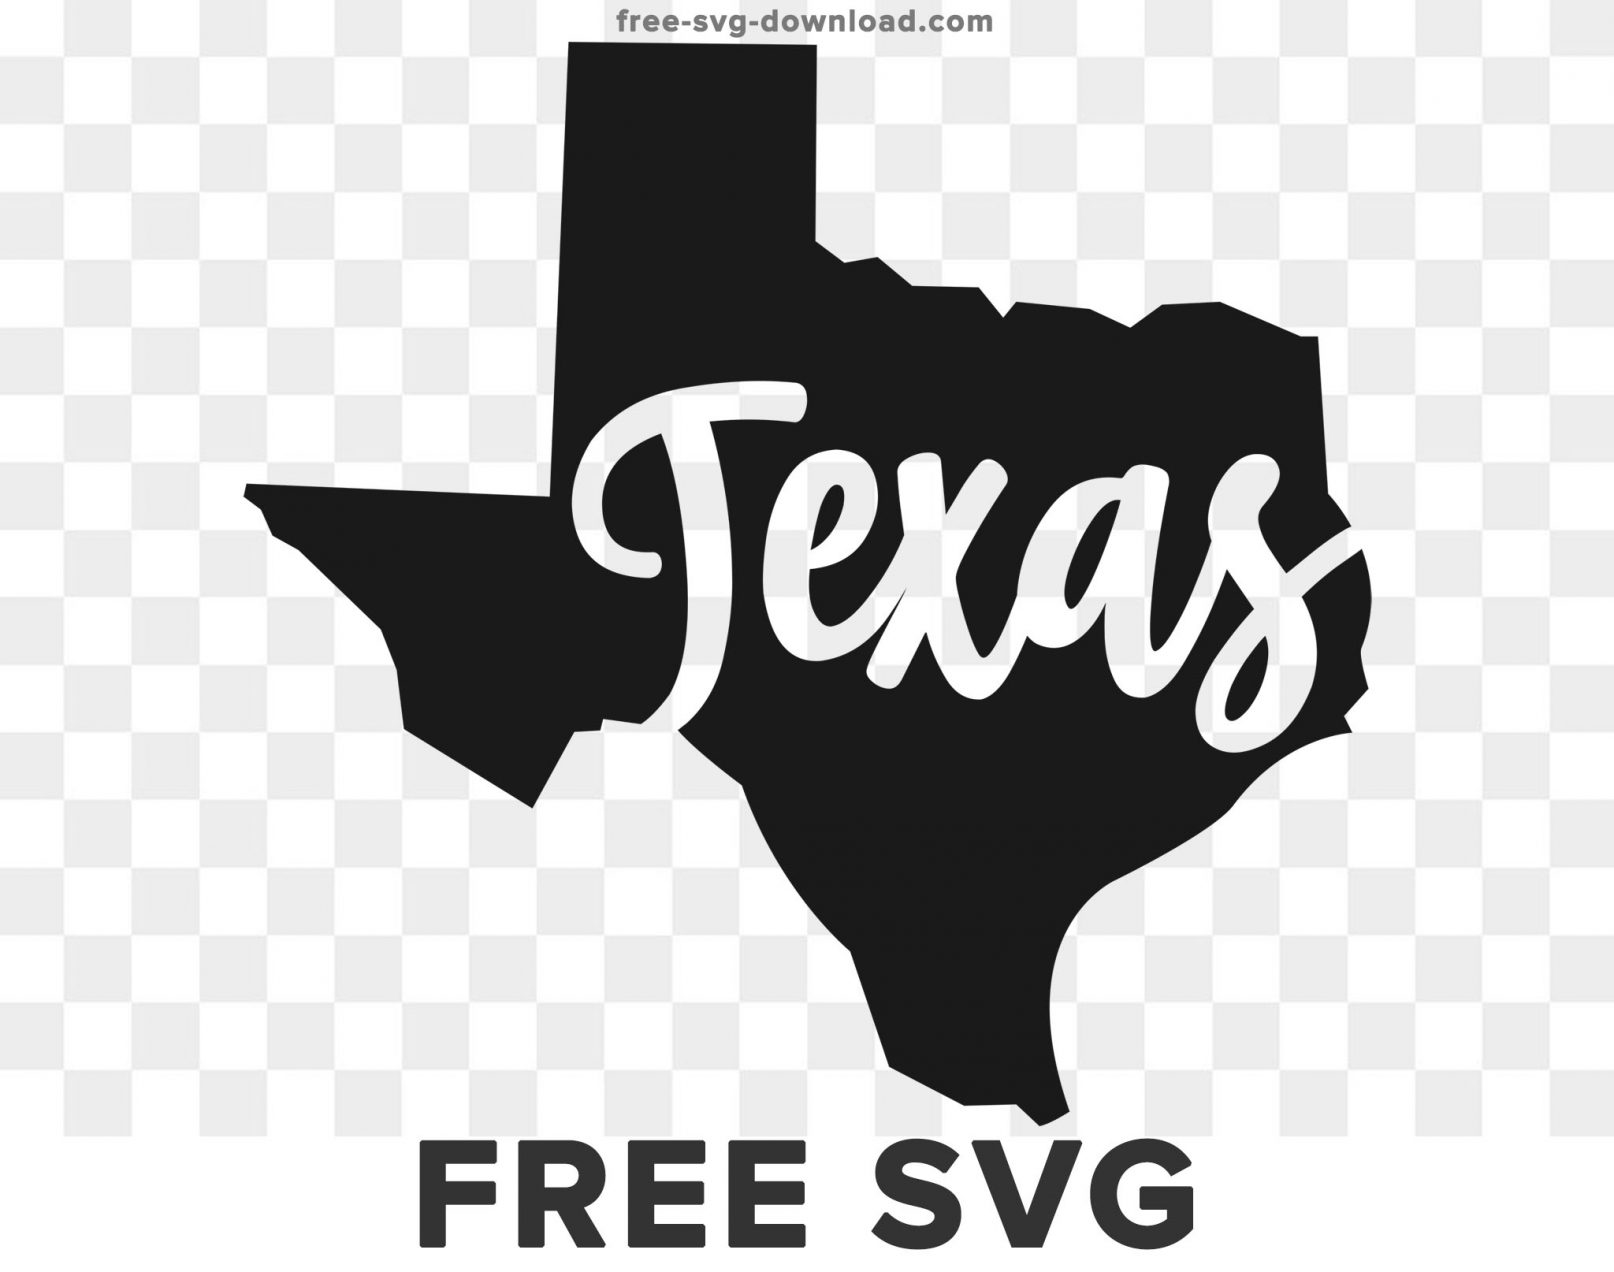 Texas Vector Svg Free Svg Download - vrogue.co